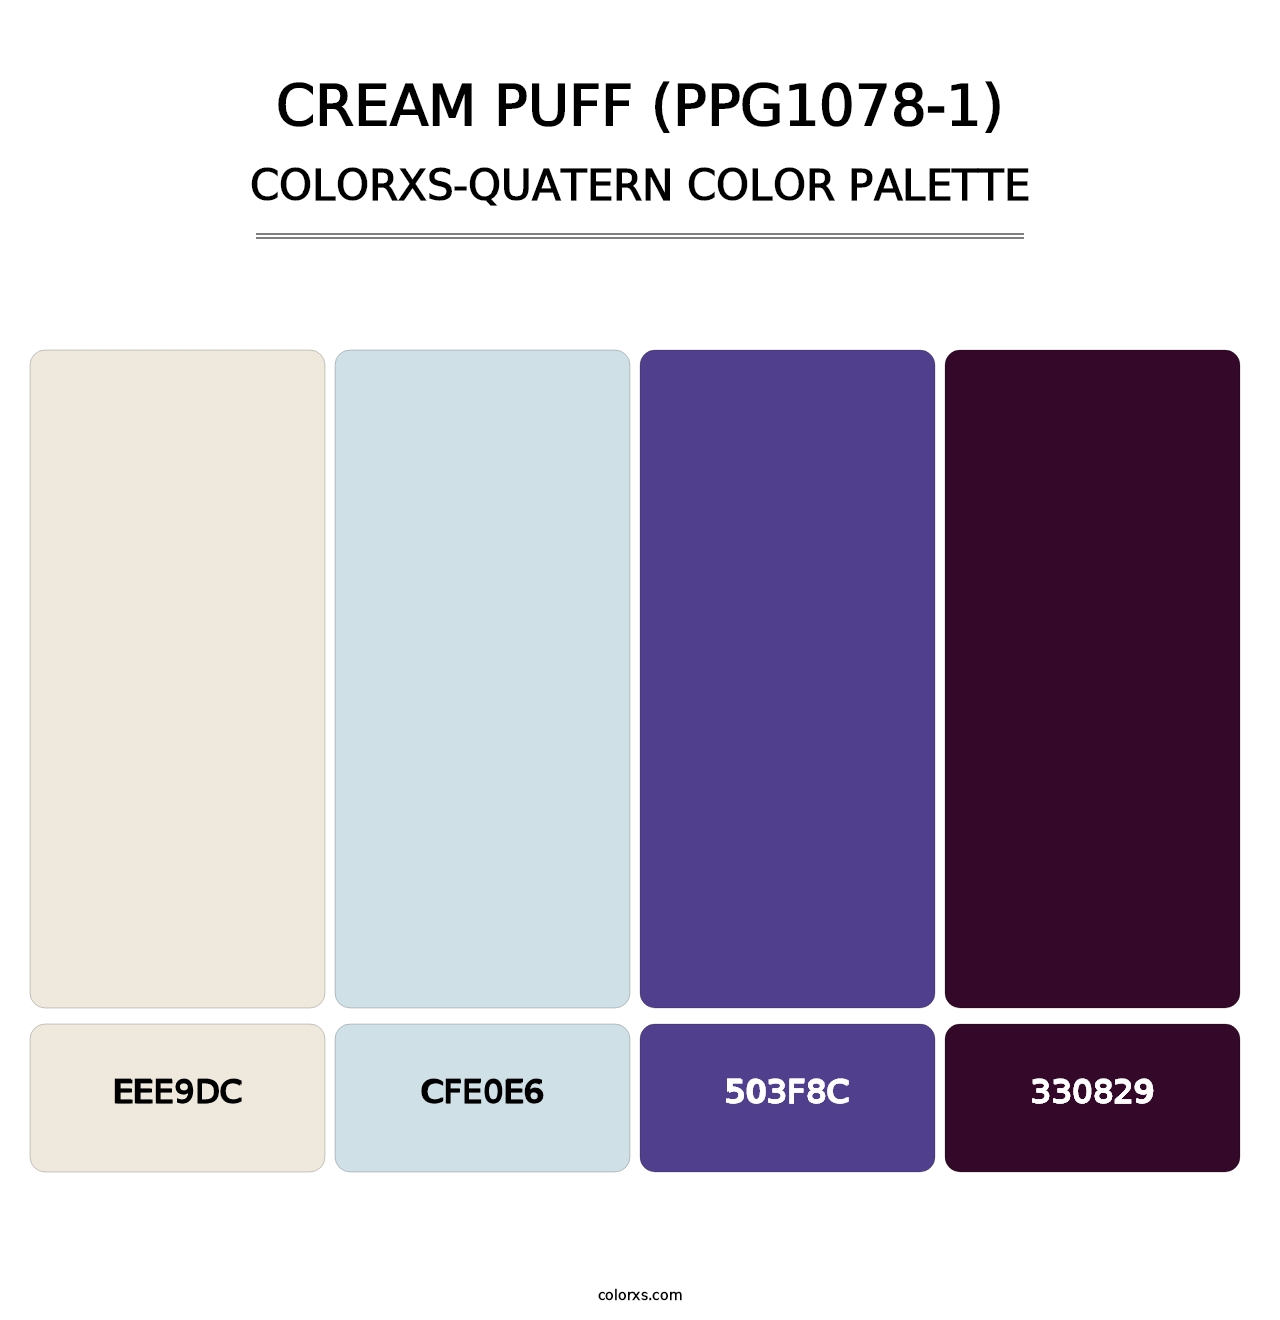 Cream Puff (PPG1078-1) - Colorxs Quatern Palette